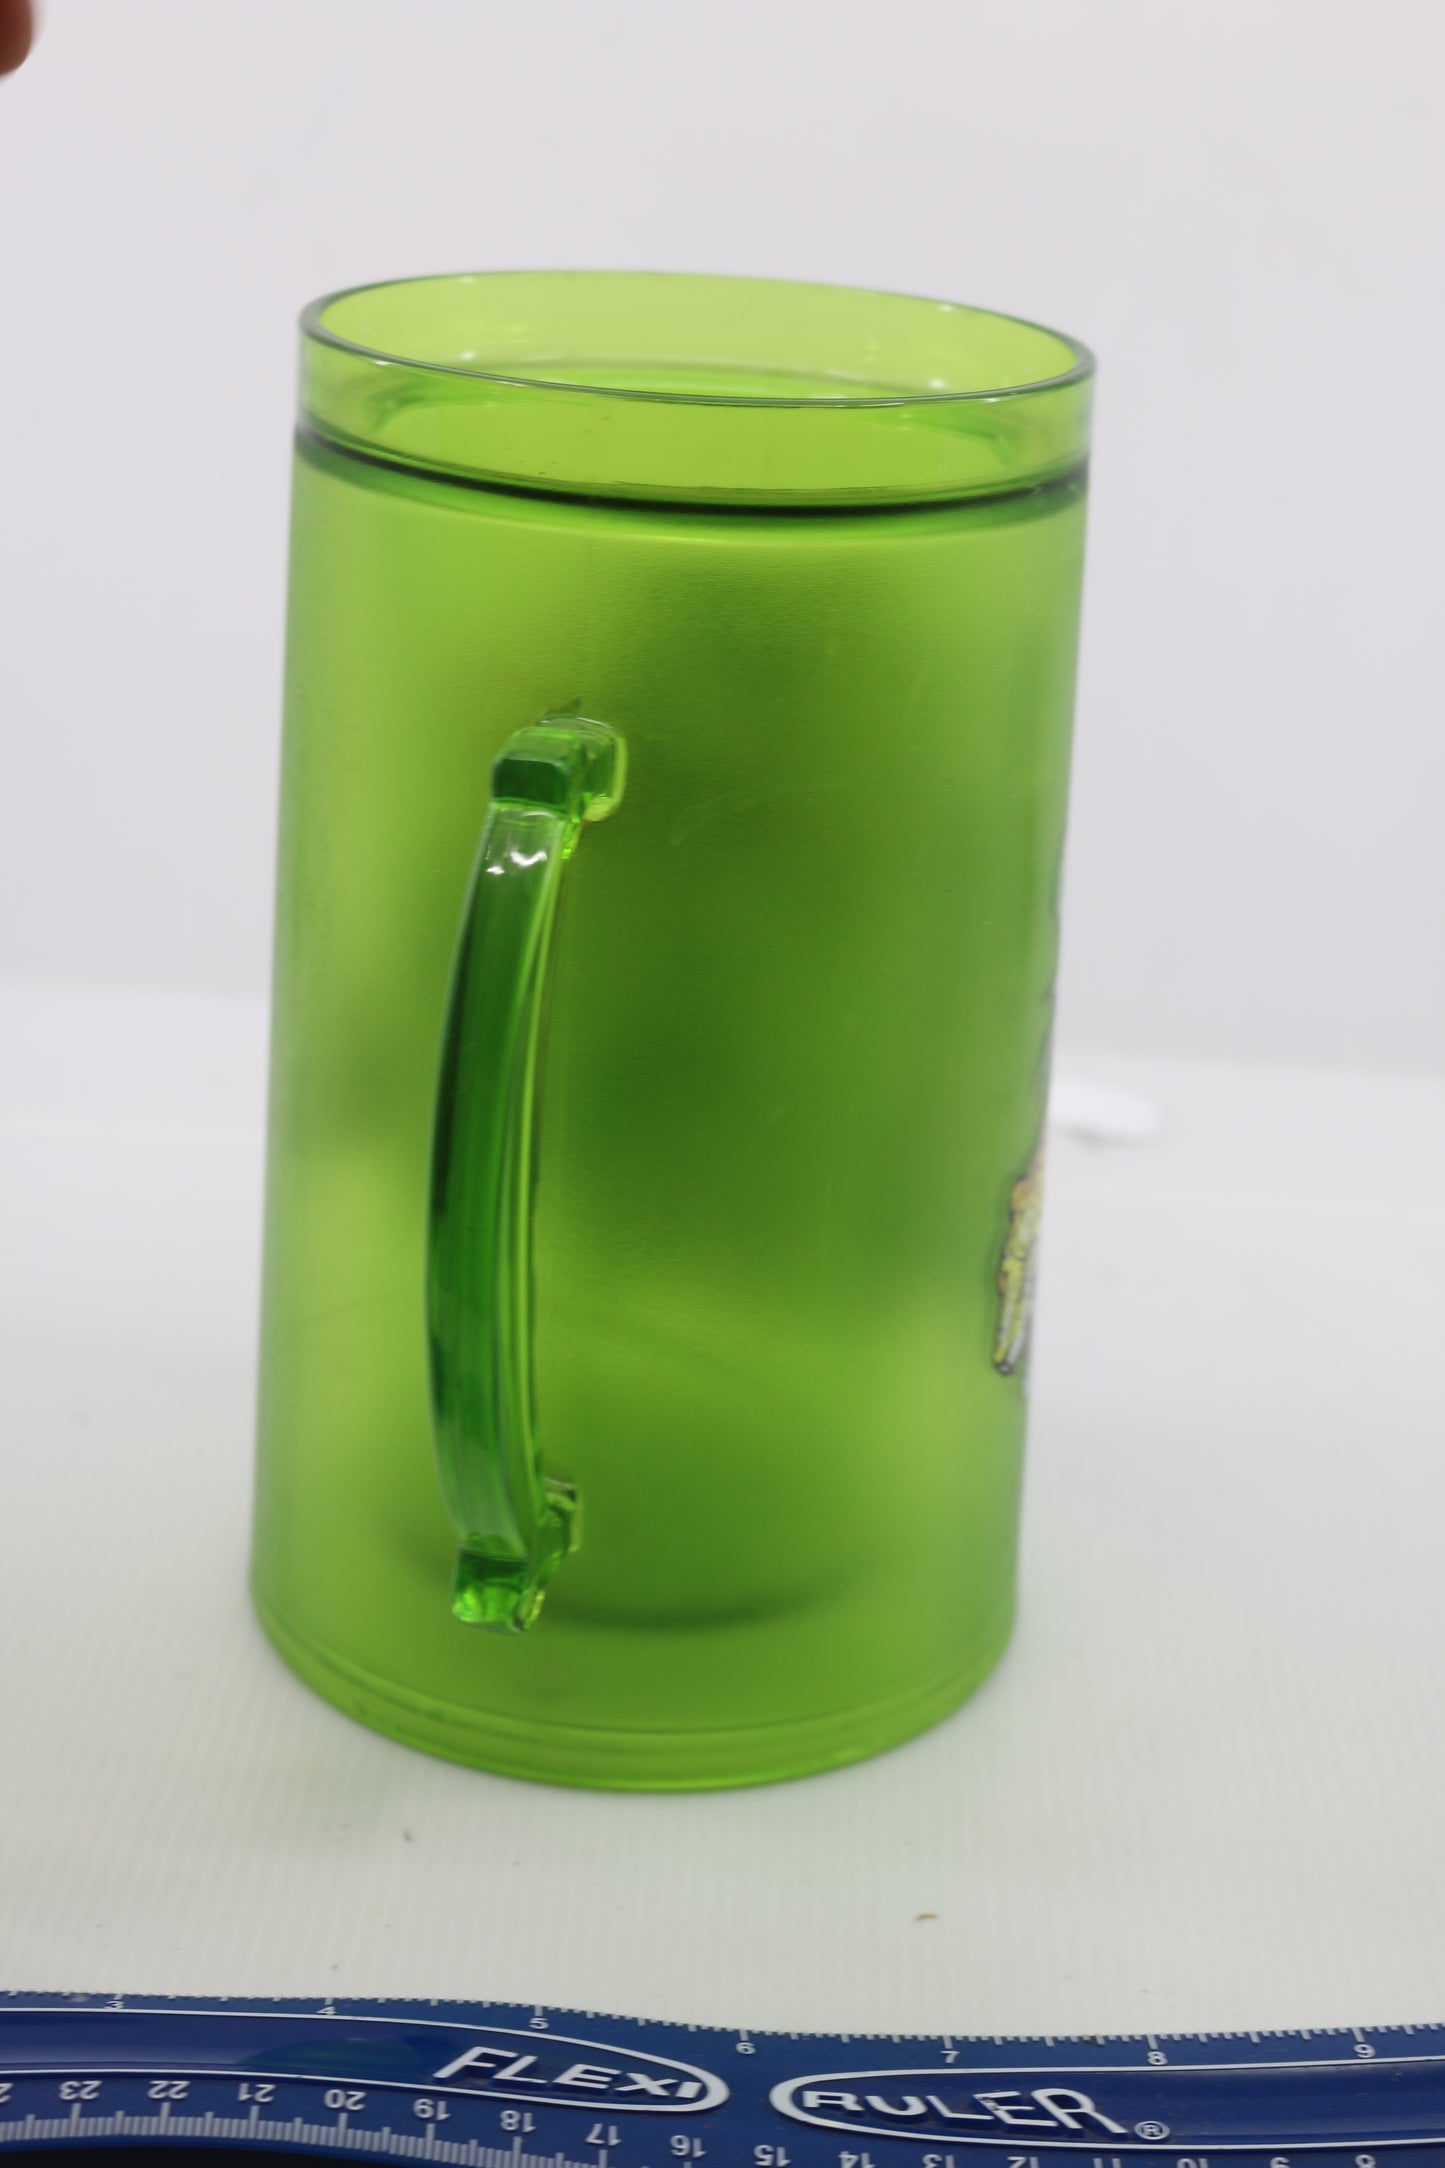 RAINFOREST CAFE FREEZER Collectible MUG Cup Stein Green Gorilla rare toy